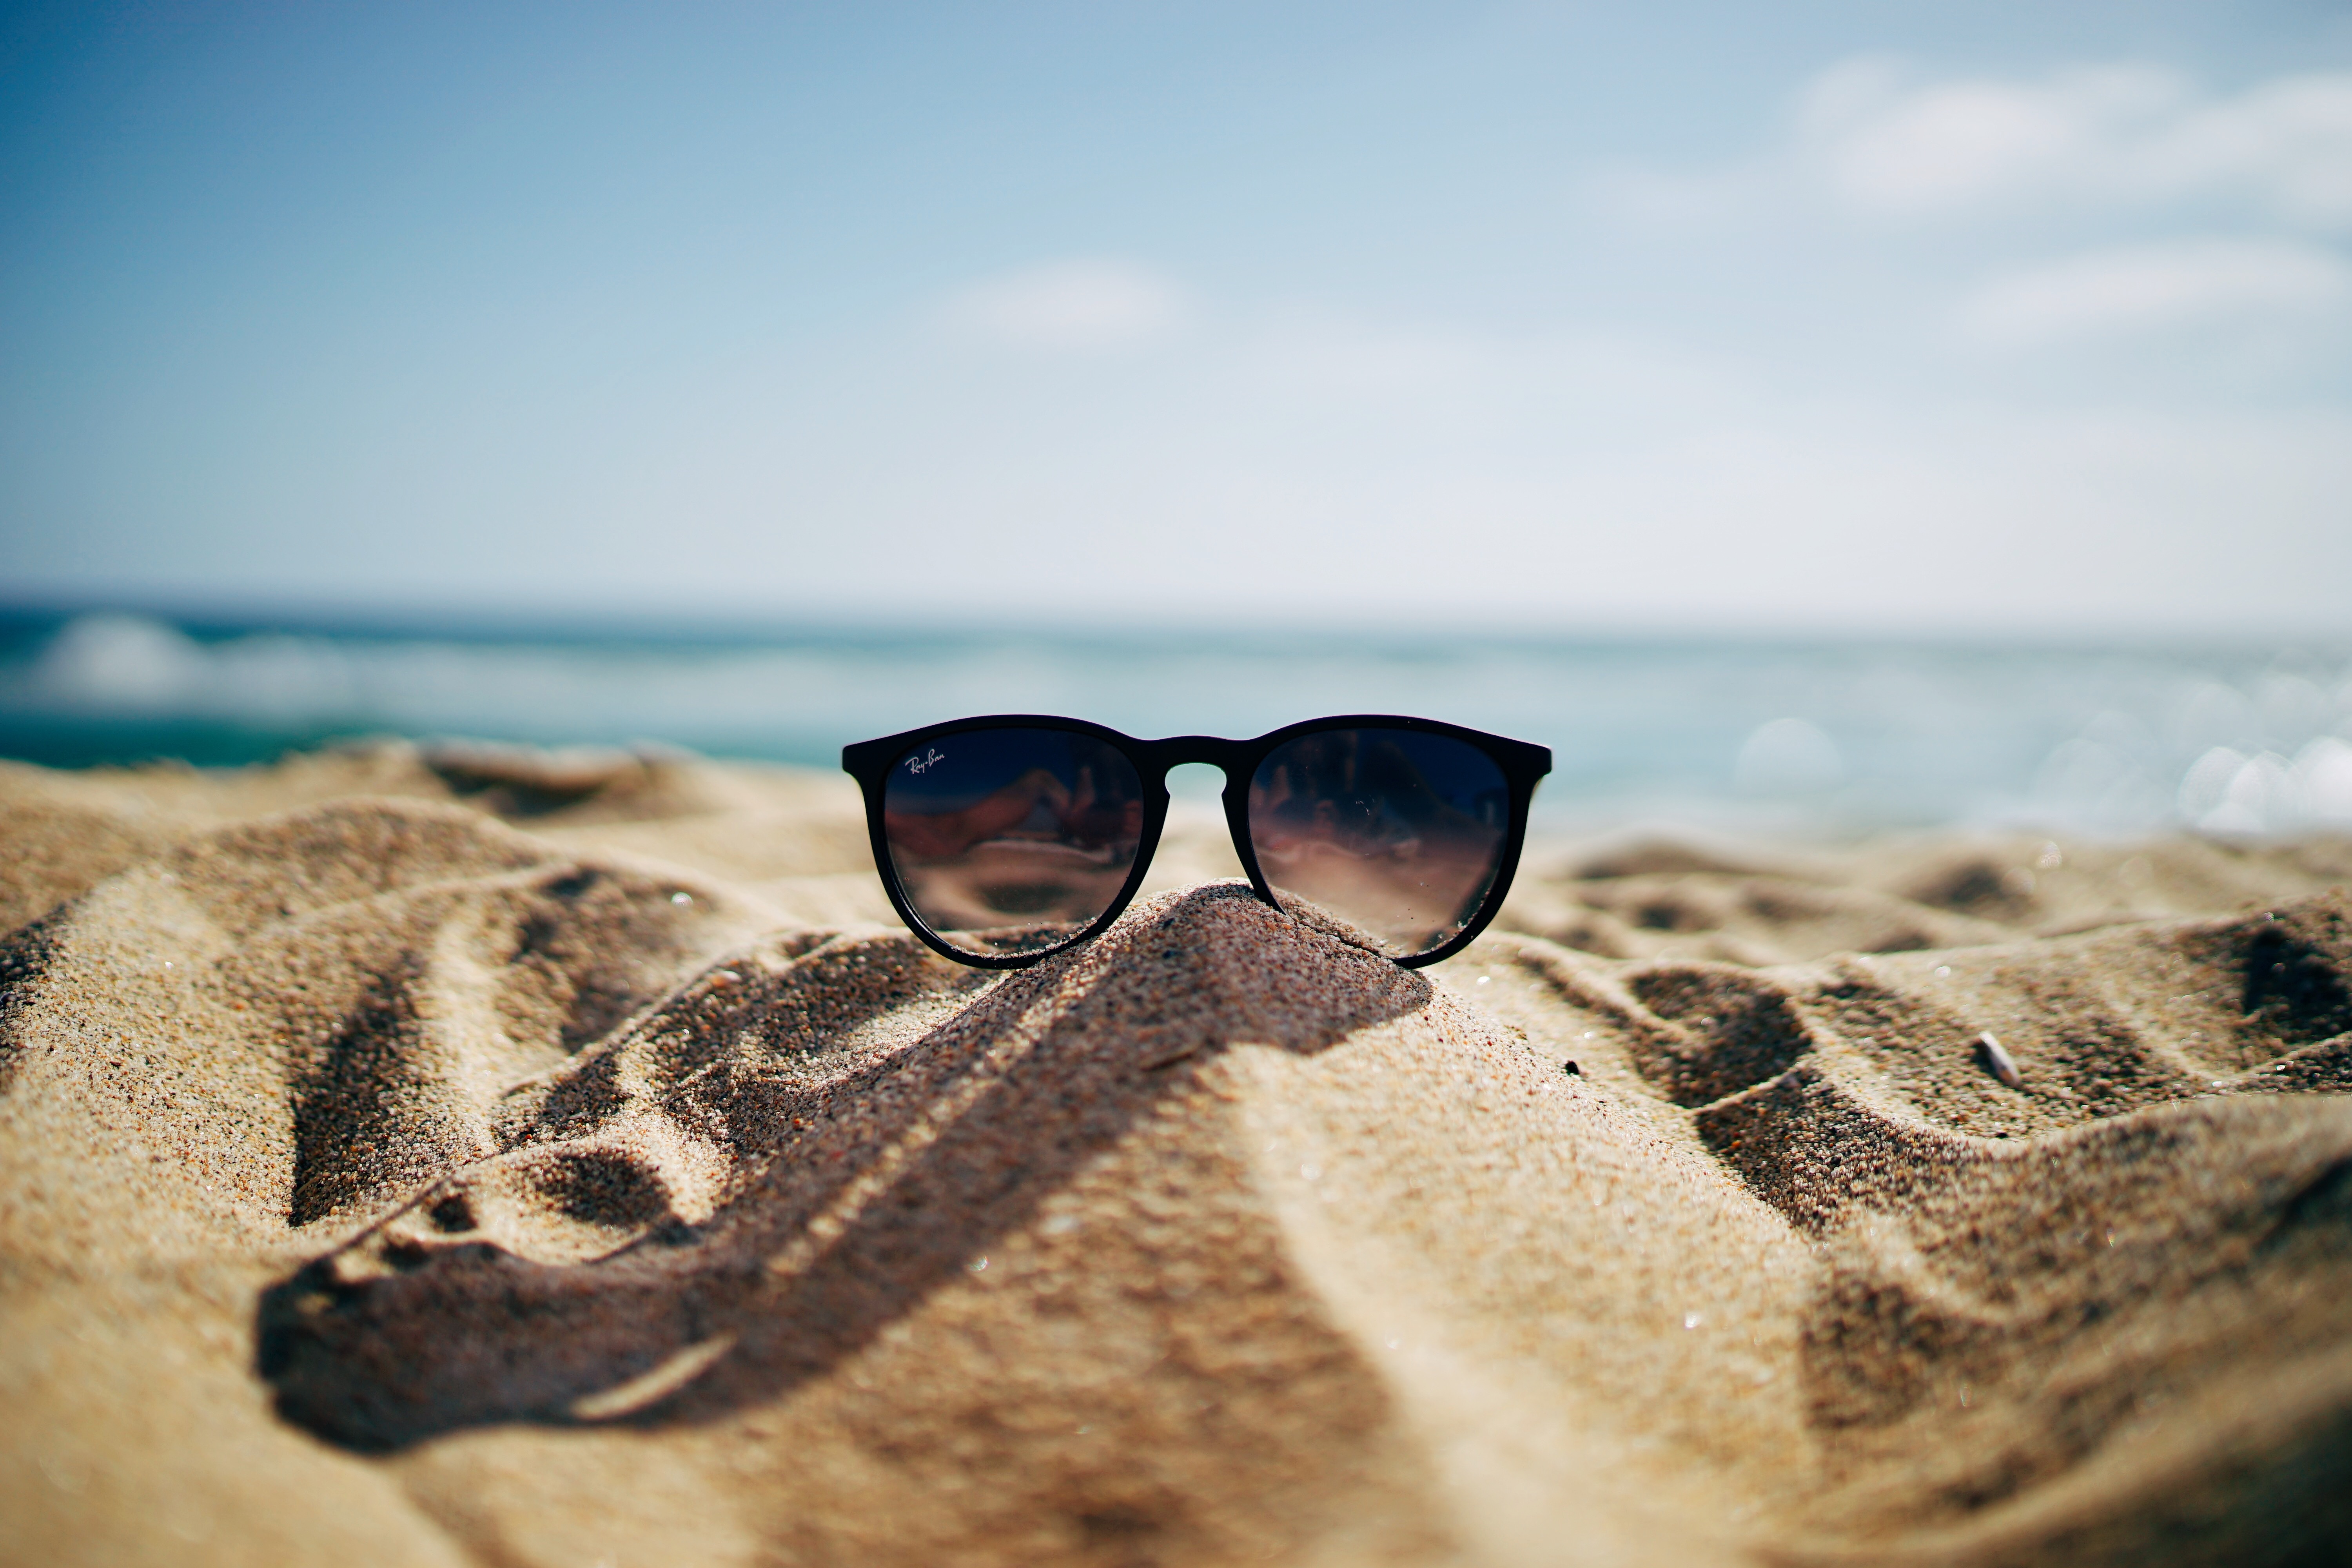 Free photo Ray Ban sunglasses on a sandy beach.